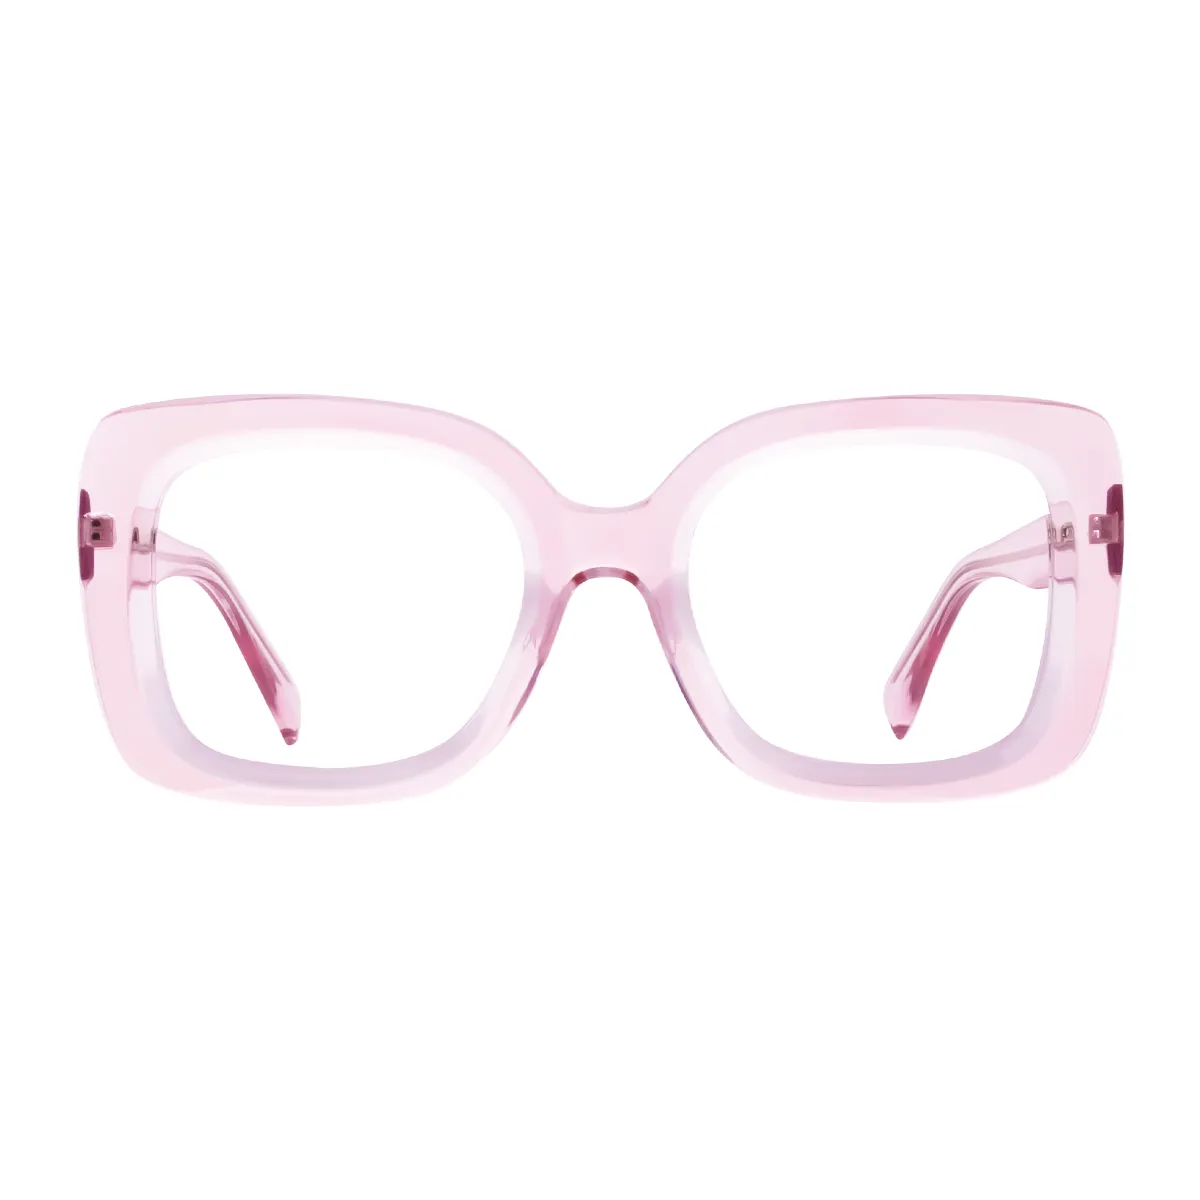 Madeline - Square Transparent-Pink Glasses for Women